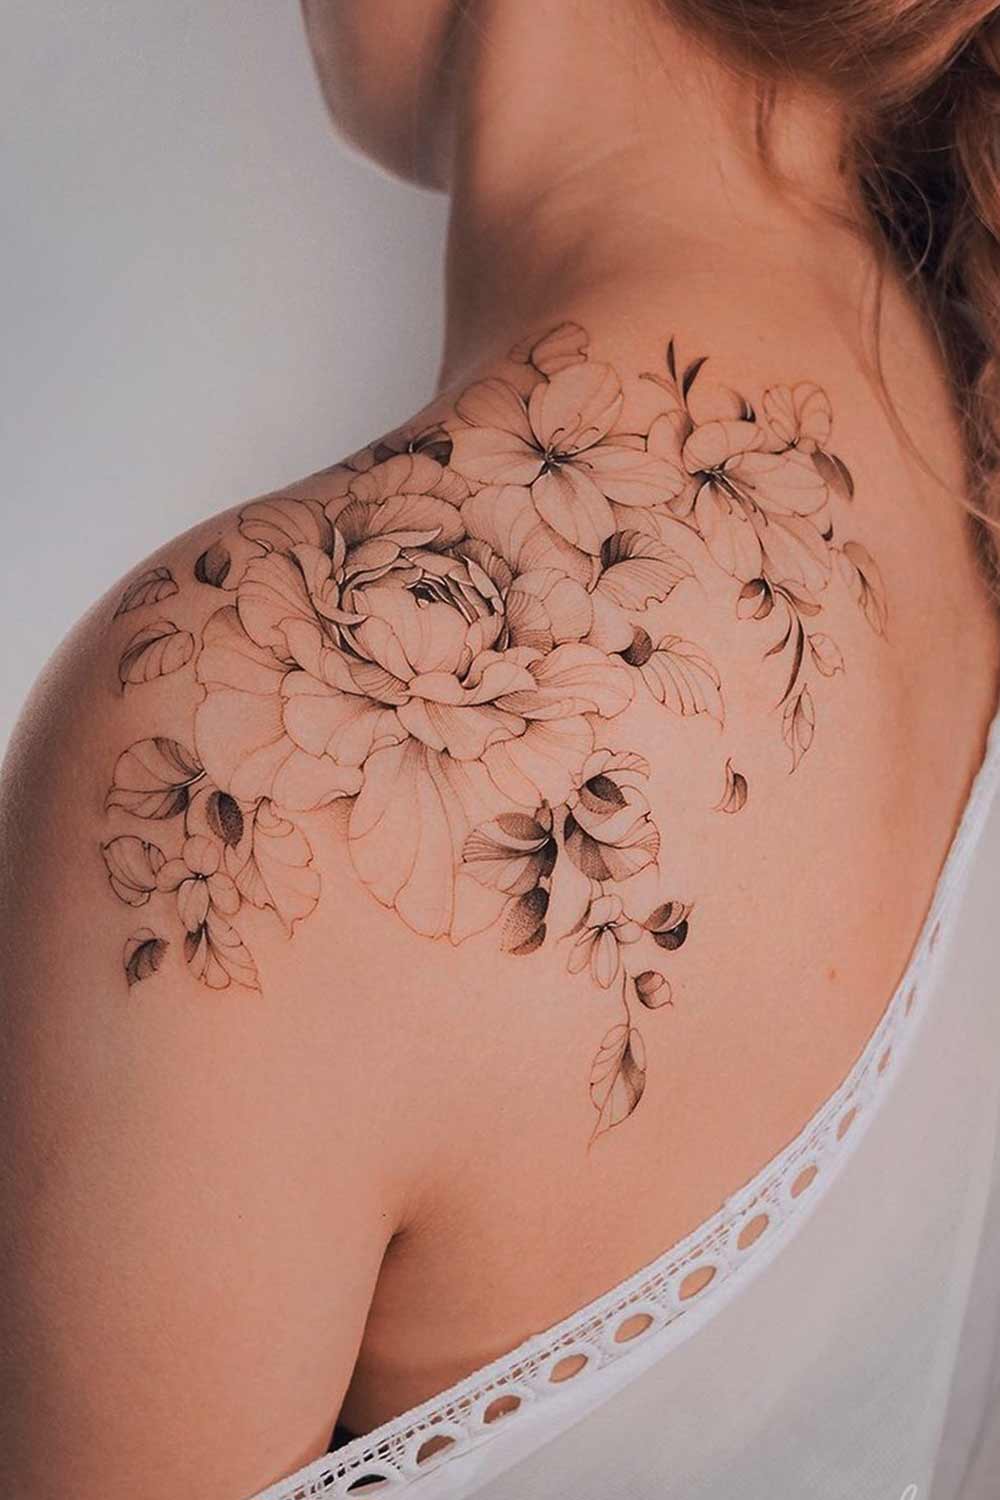 2-Tatuagem-floral-no-ombro-@karolinaszymanska_tattoo 